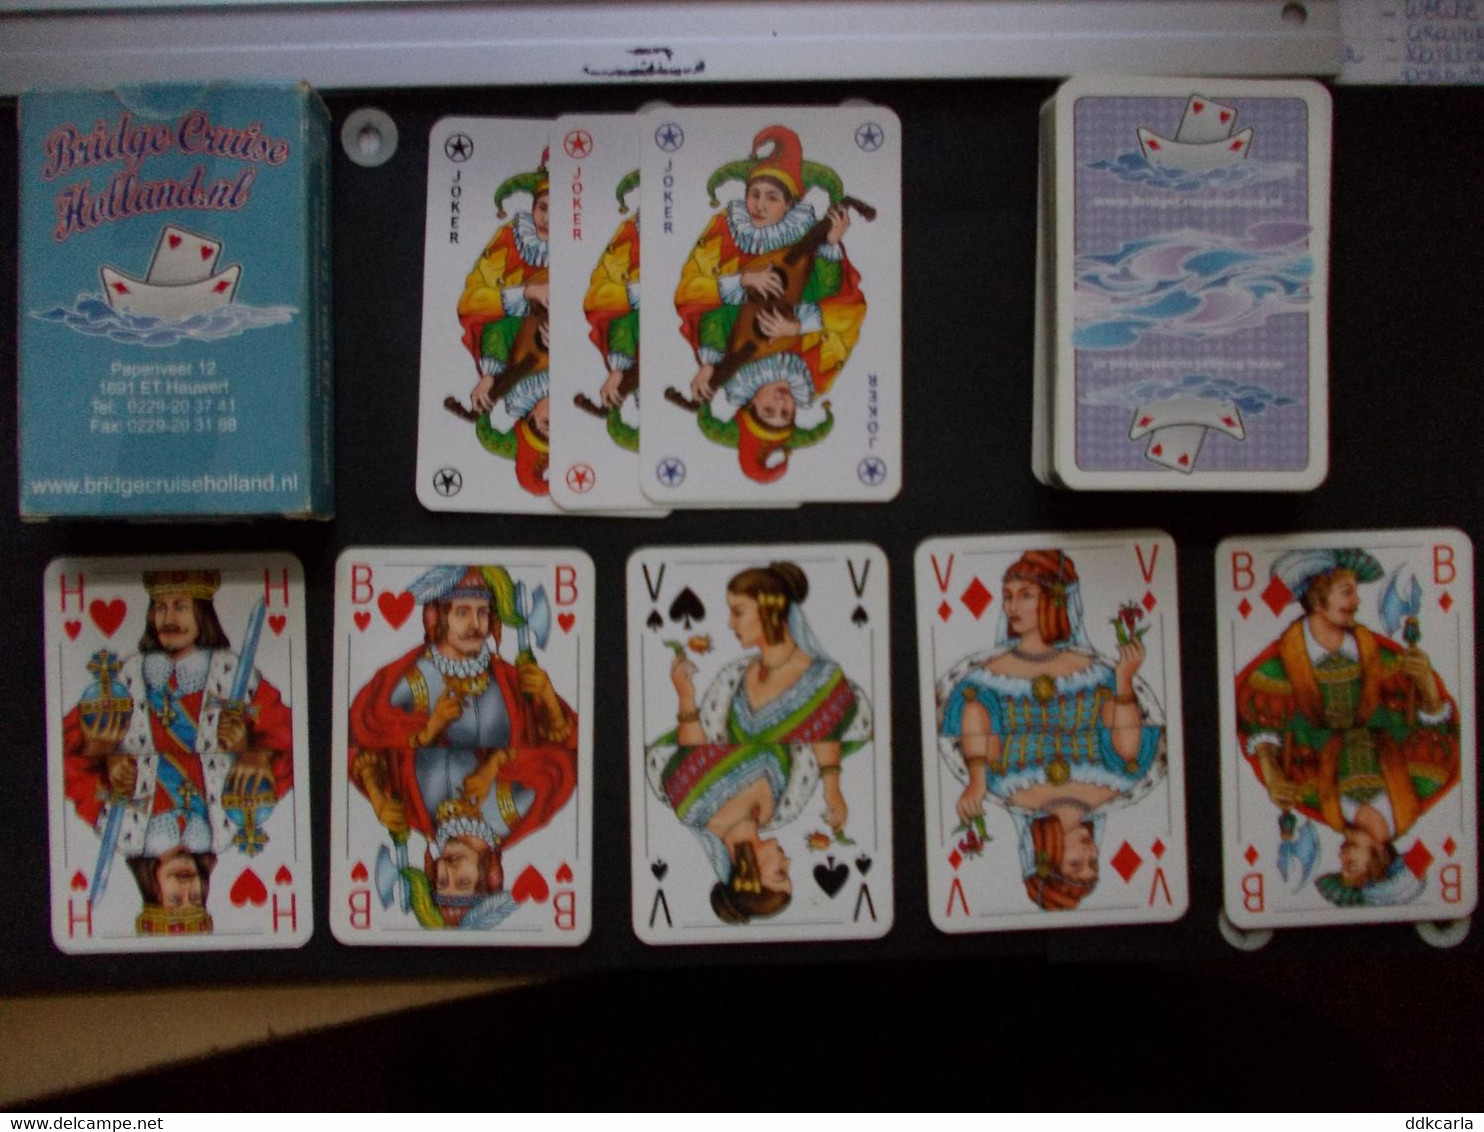 Speelkaarten - Jeu Des Cartes - Bridge Cruise Holland.nl - 52 Kaarten + 3 Jokers - 54 Cartes